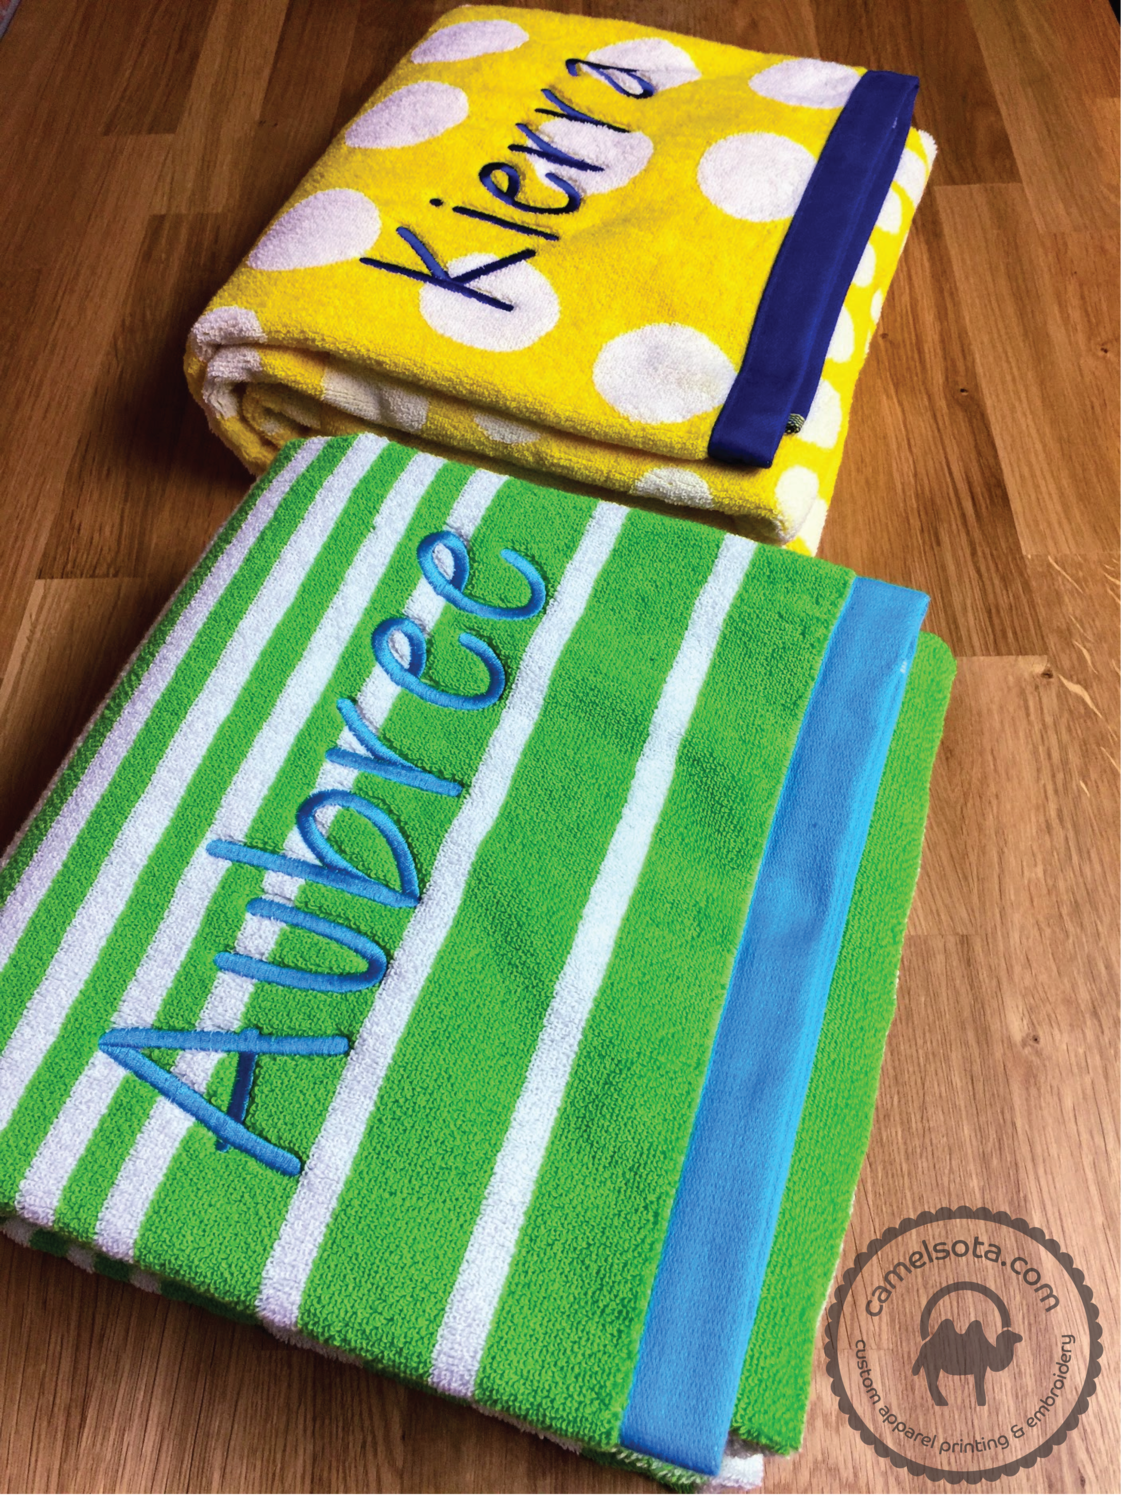 Custom Embroidered Charisma Extra Large Resort Beach Towel 35" x 70", Seasonal Item - Limited Quantity